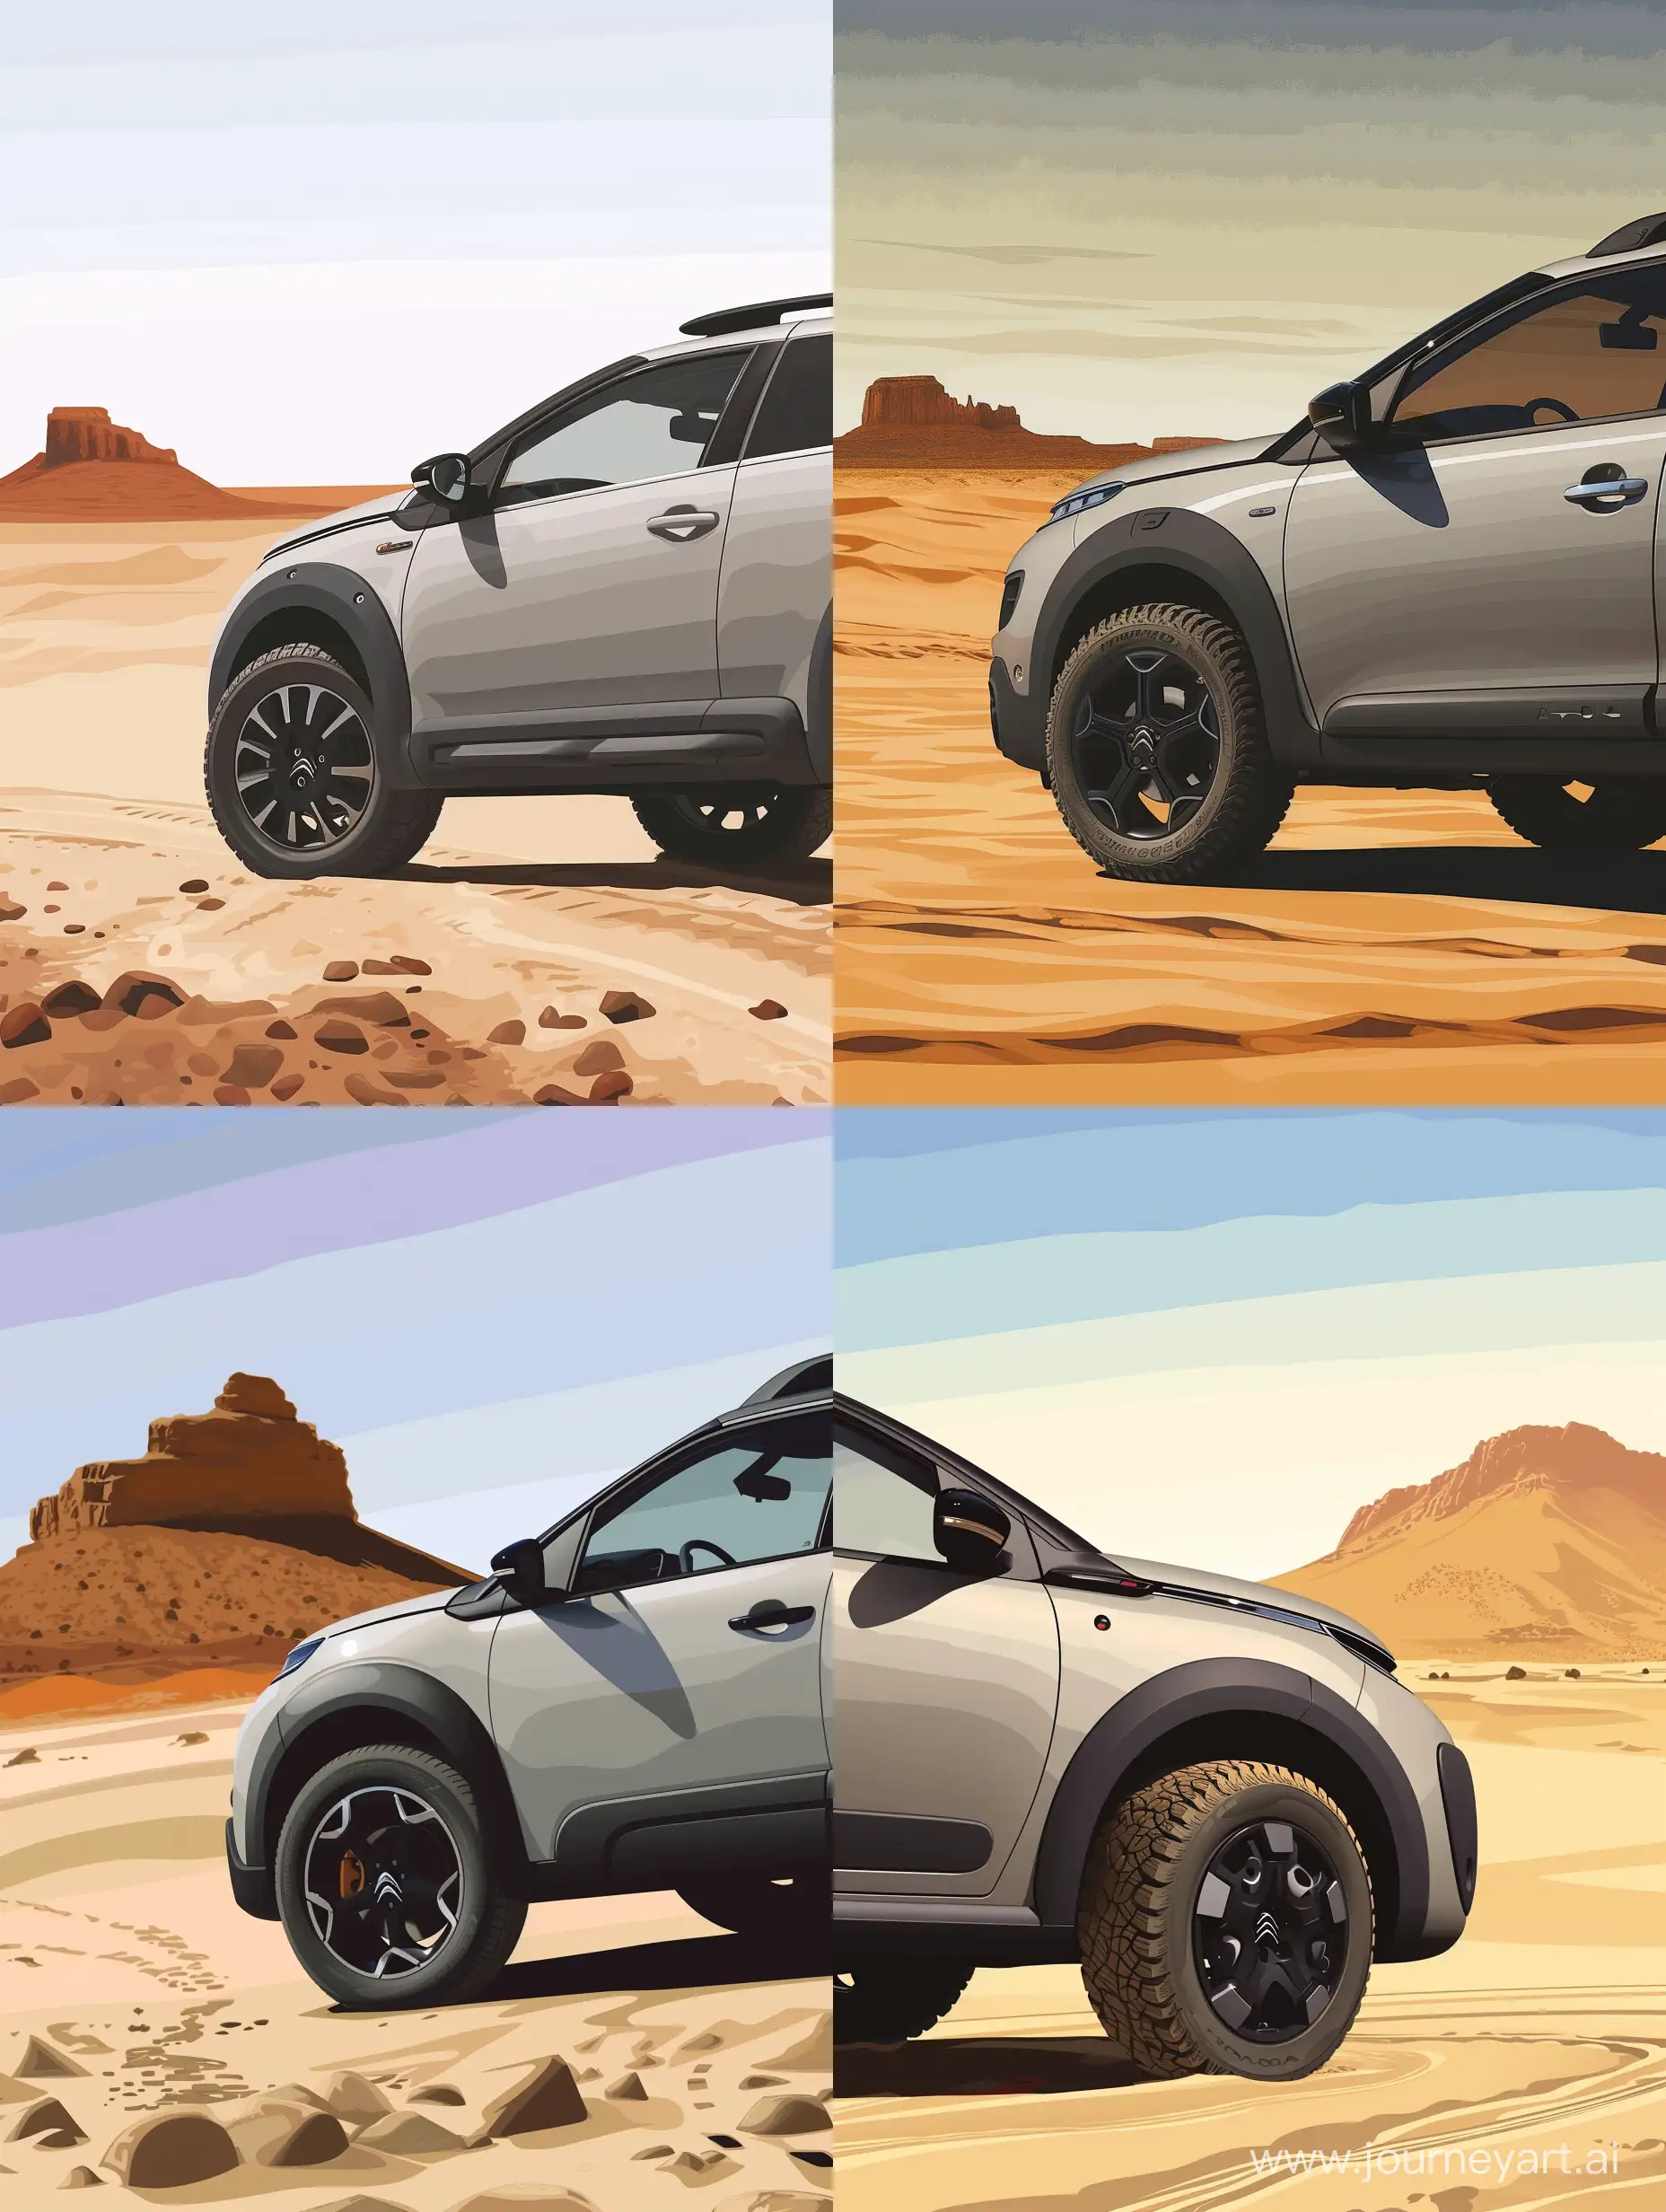 Silver gray 2015 model Citroen C4 Cactus vehicle with black rims, in the desert, illustration wallpaper, 2015 model Citroen C4 Cactus   2014 model C4 Cactus 